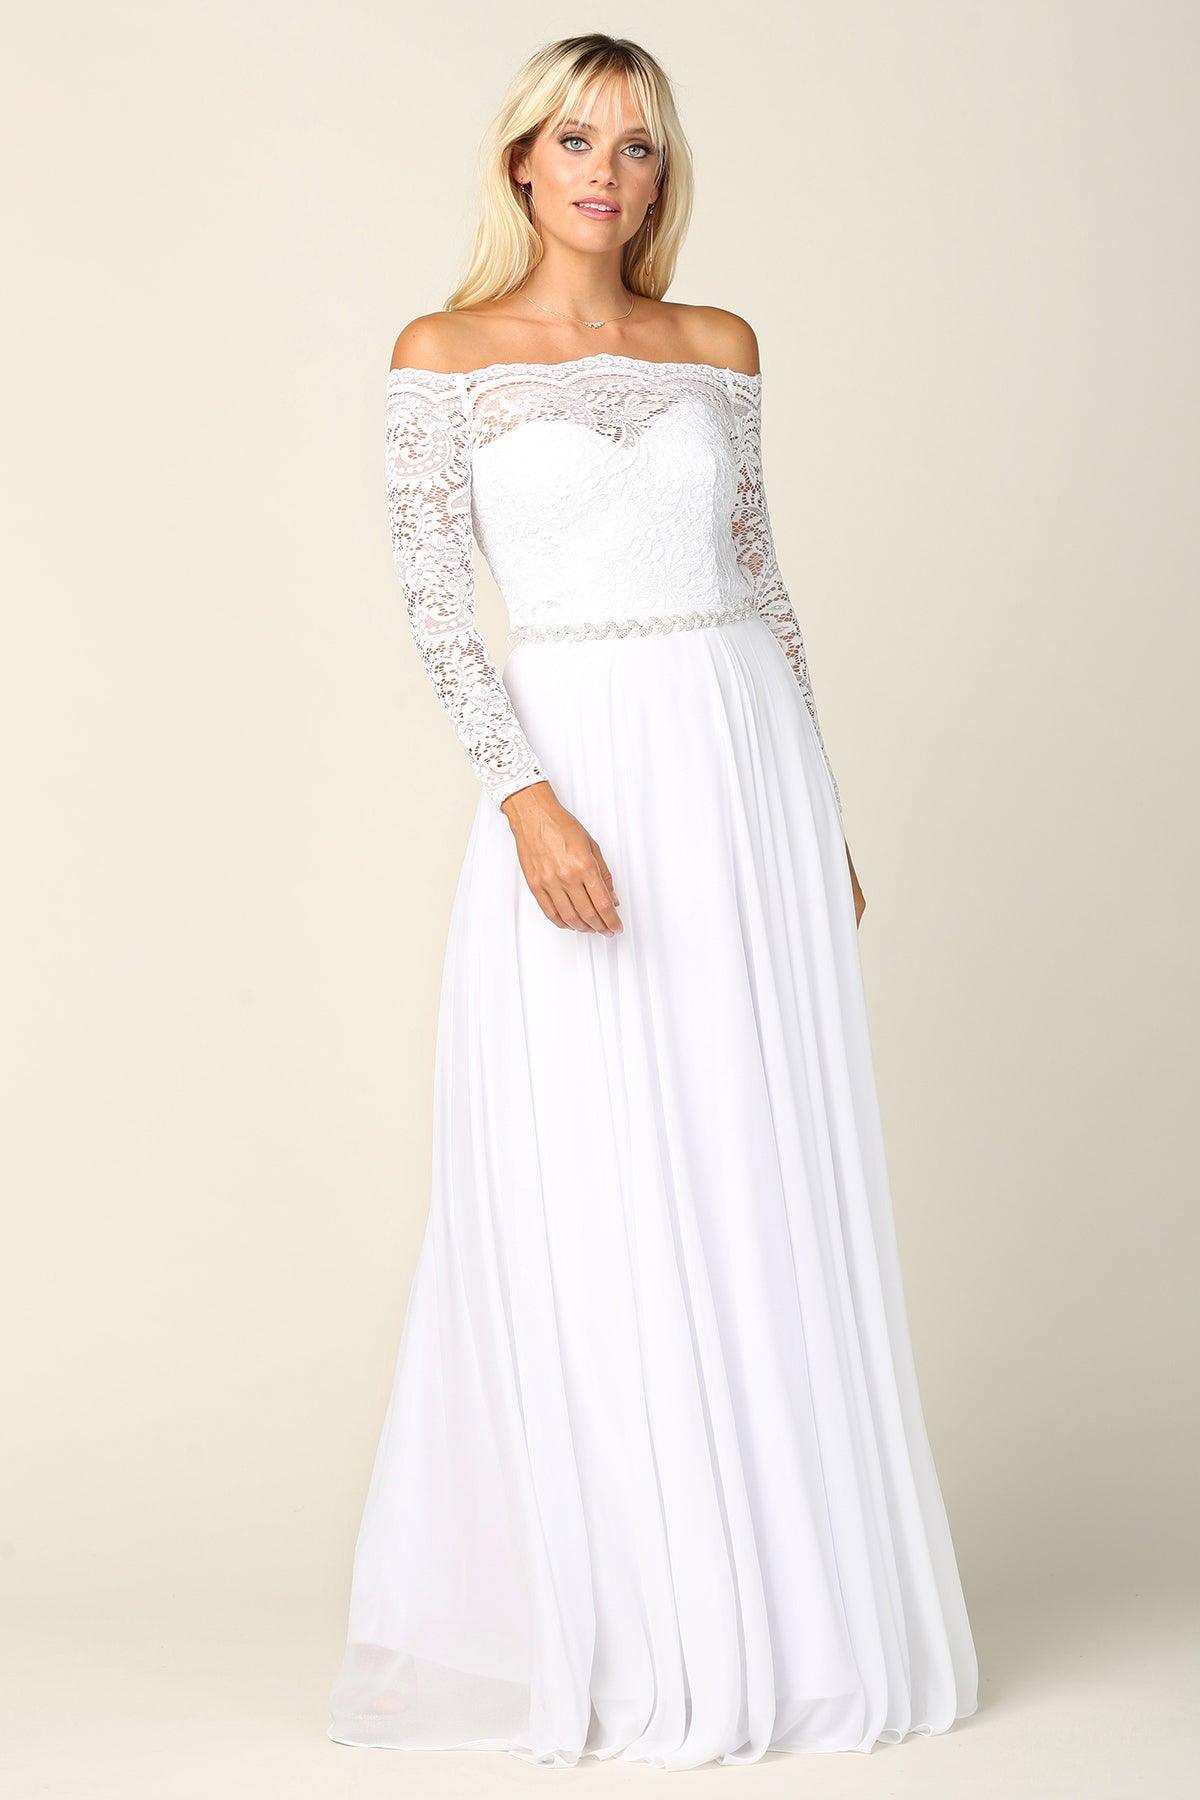 Long Off Shoulder Lace Chiffon Wedding Dress Sale - The Dress Outlet